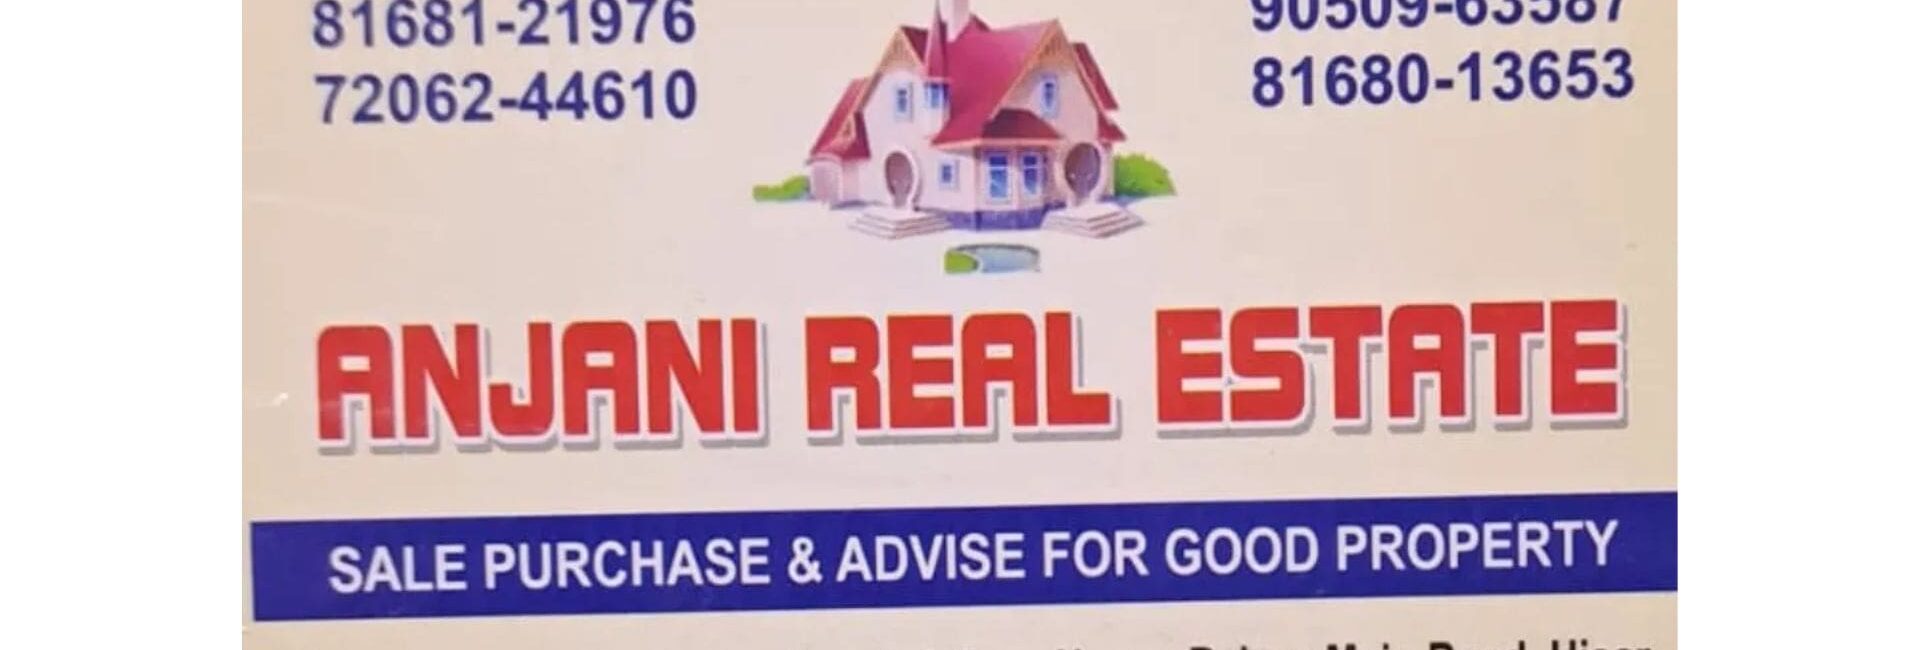 Anjani Real Estate - Real Estate Agent in Hisar